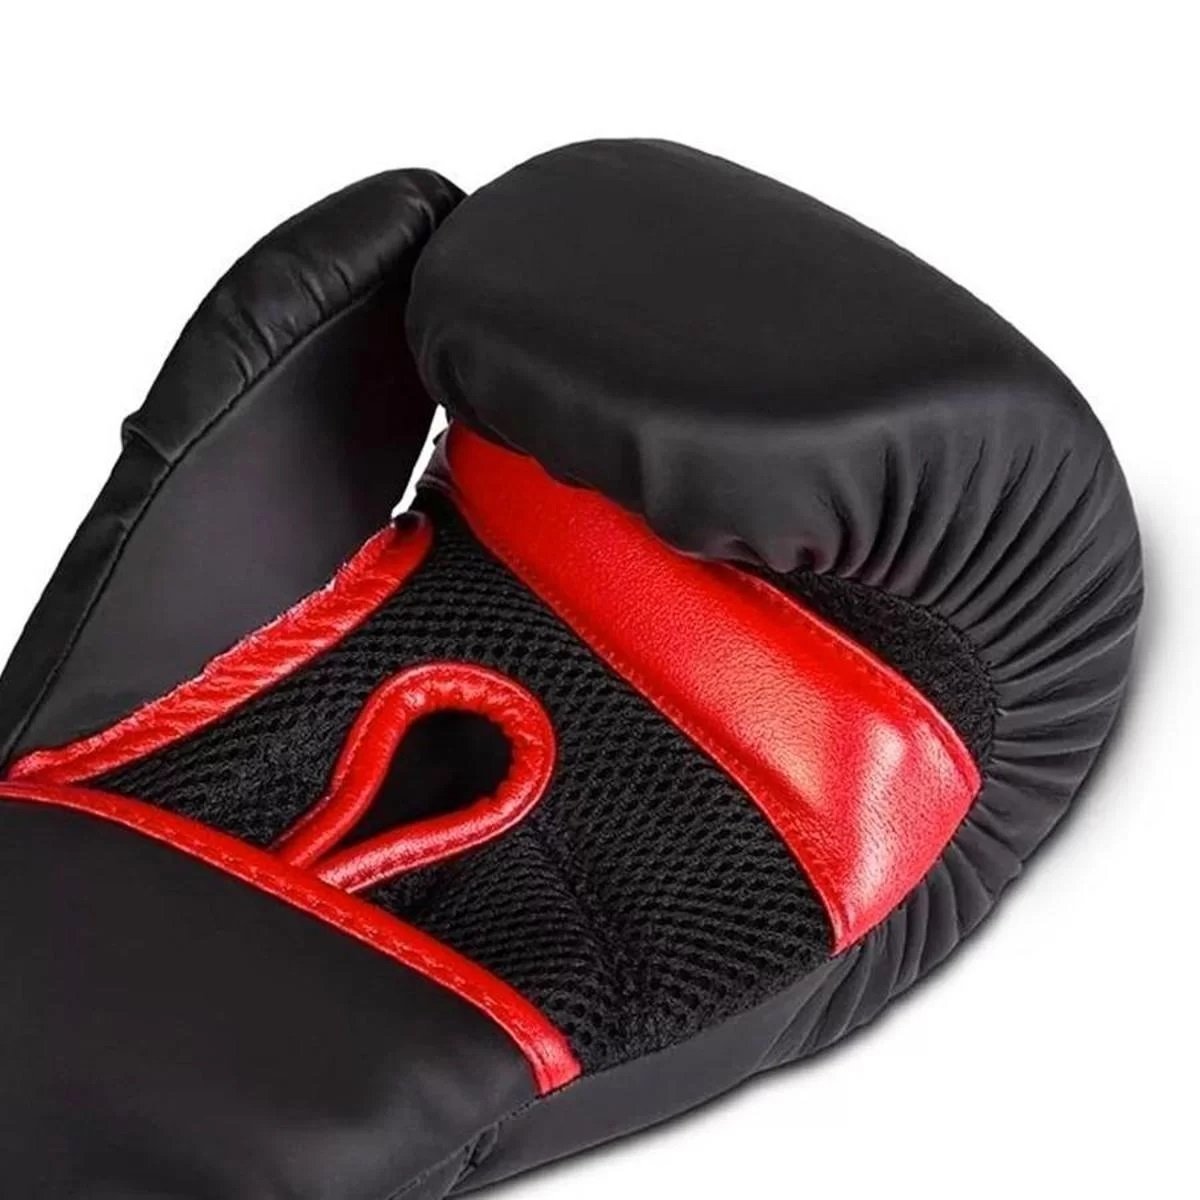 Kit Luva de Boxe Muay Thai - Naja Black Preto/vermelho + Bandagem+bucal:12/preto/vermelho - 10